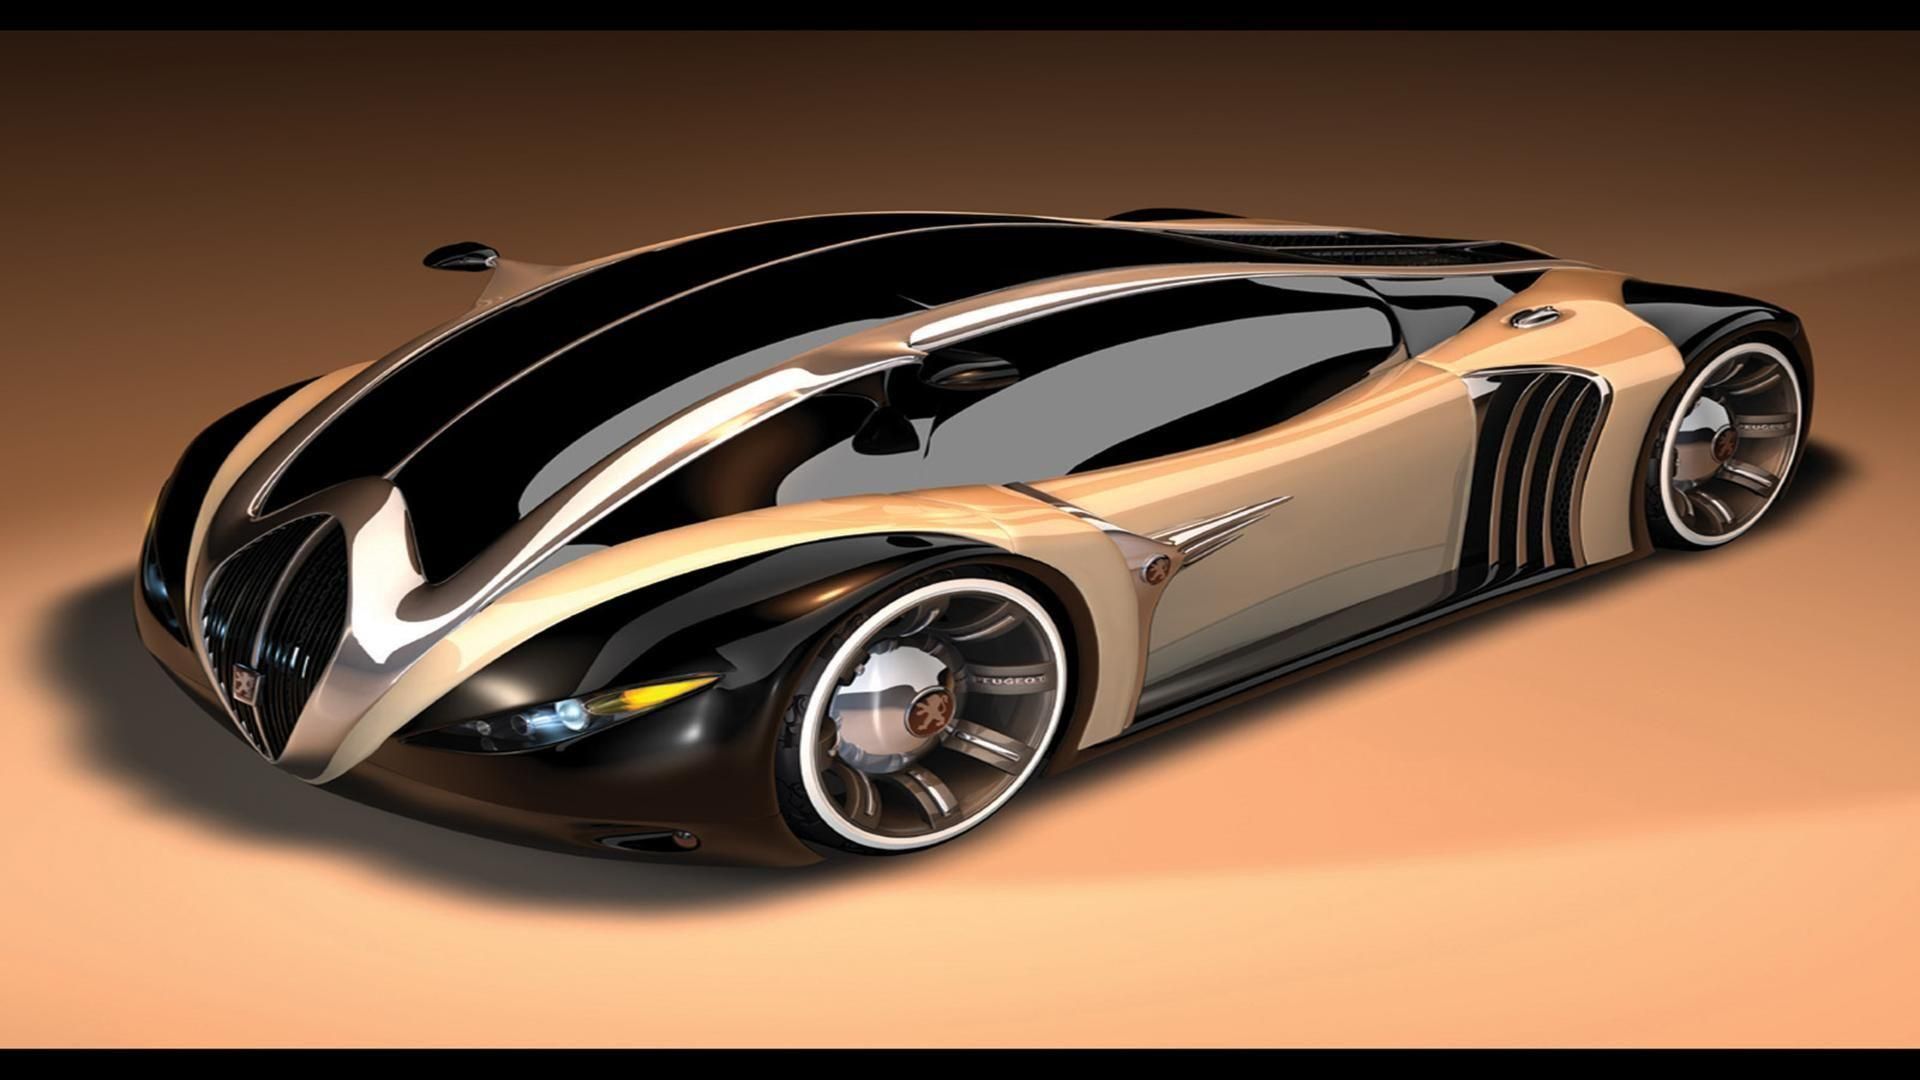 Wallpaper, Desktop, Car, Background, Peugeot, Future. Futuristic cars, Sports cars luxury, Concept car design